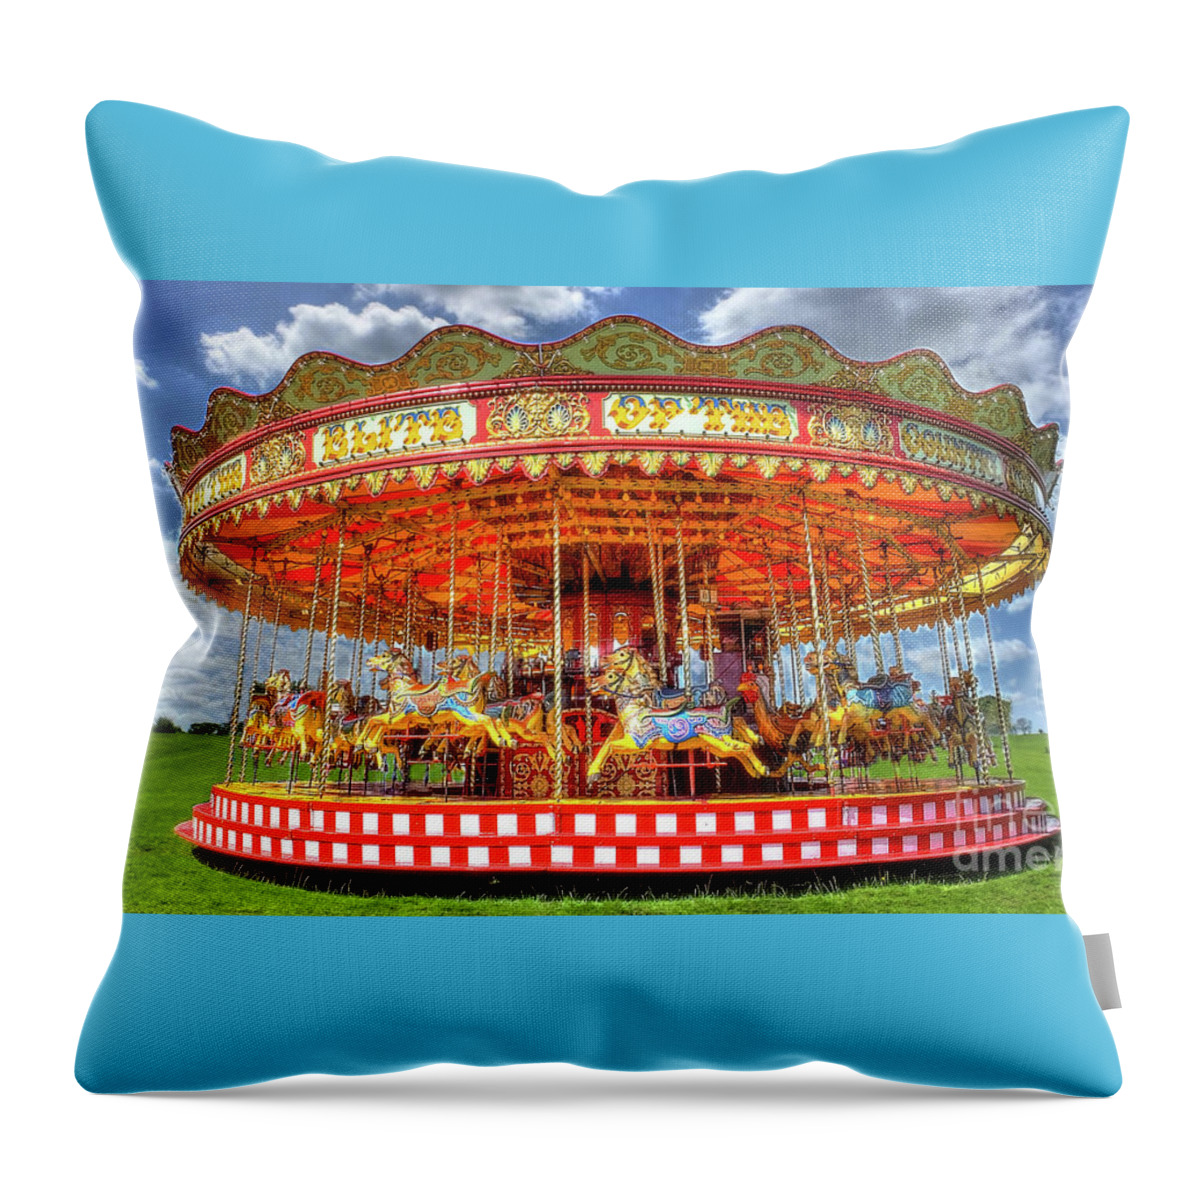 Carousel Throw Pillow featuring the photograph Carousel merrygoround by Catchavista